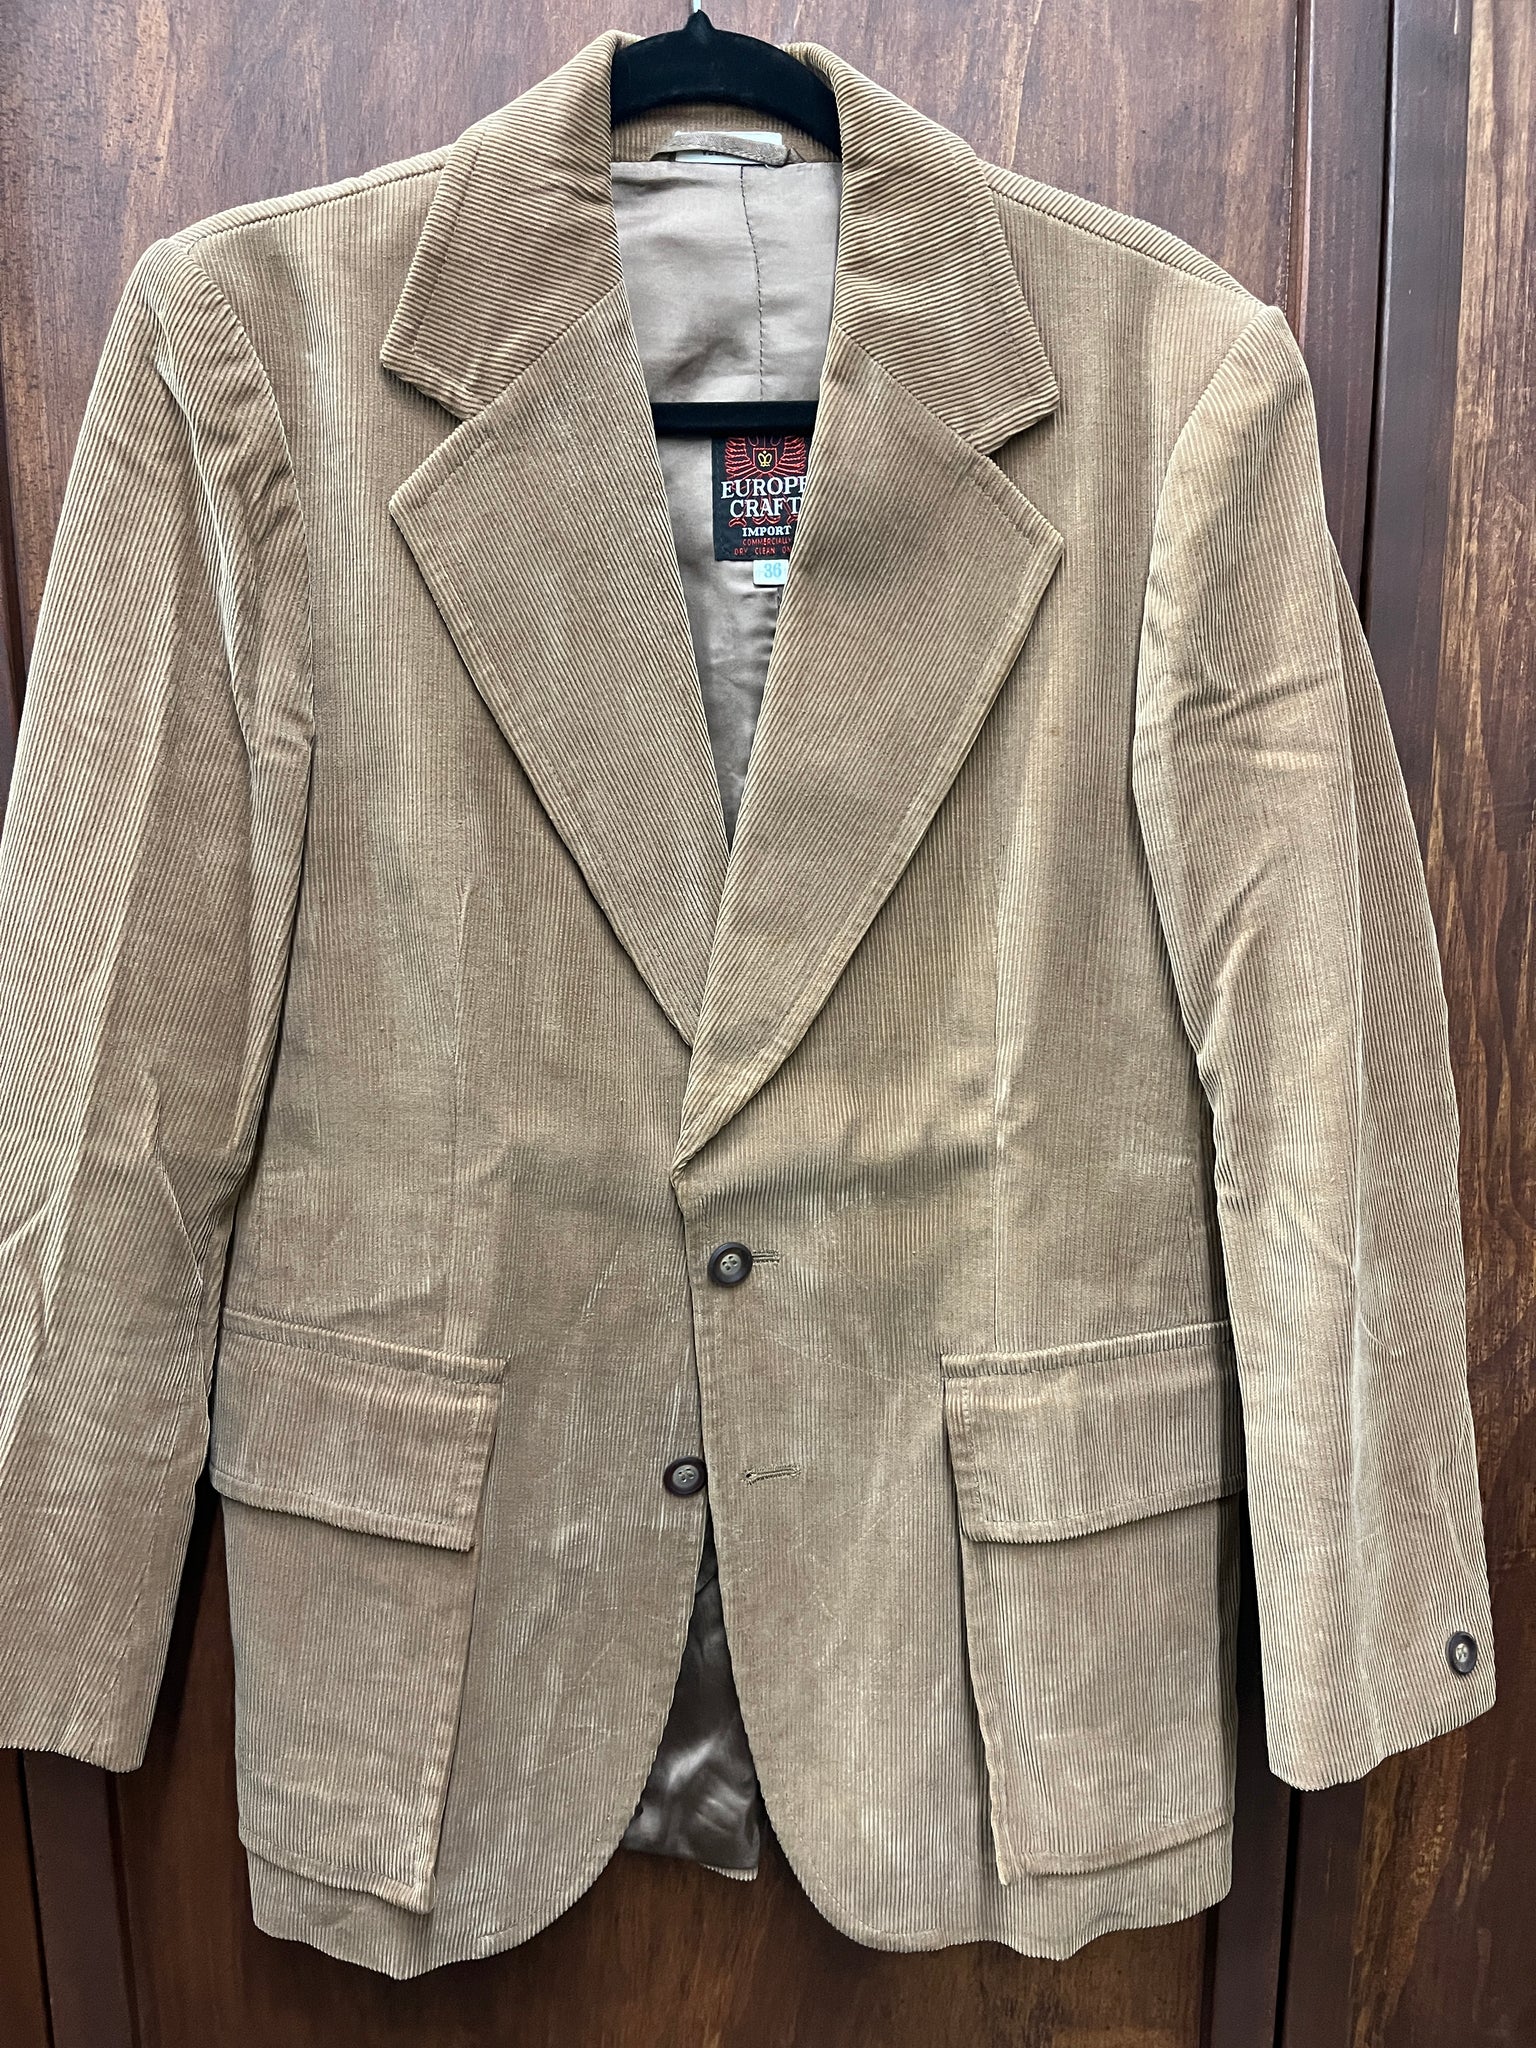 1970s Eurpean Craft brown courdoroy jacket